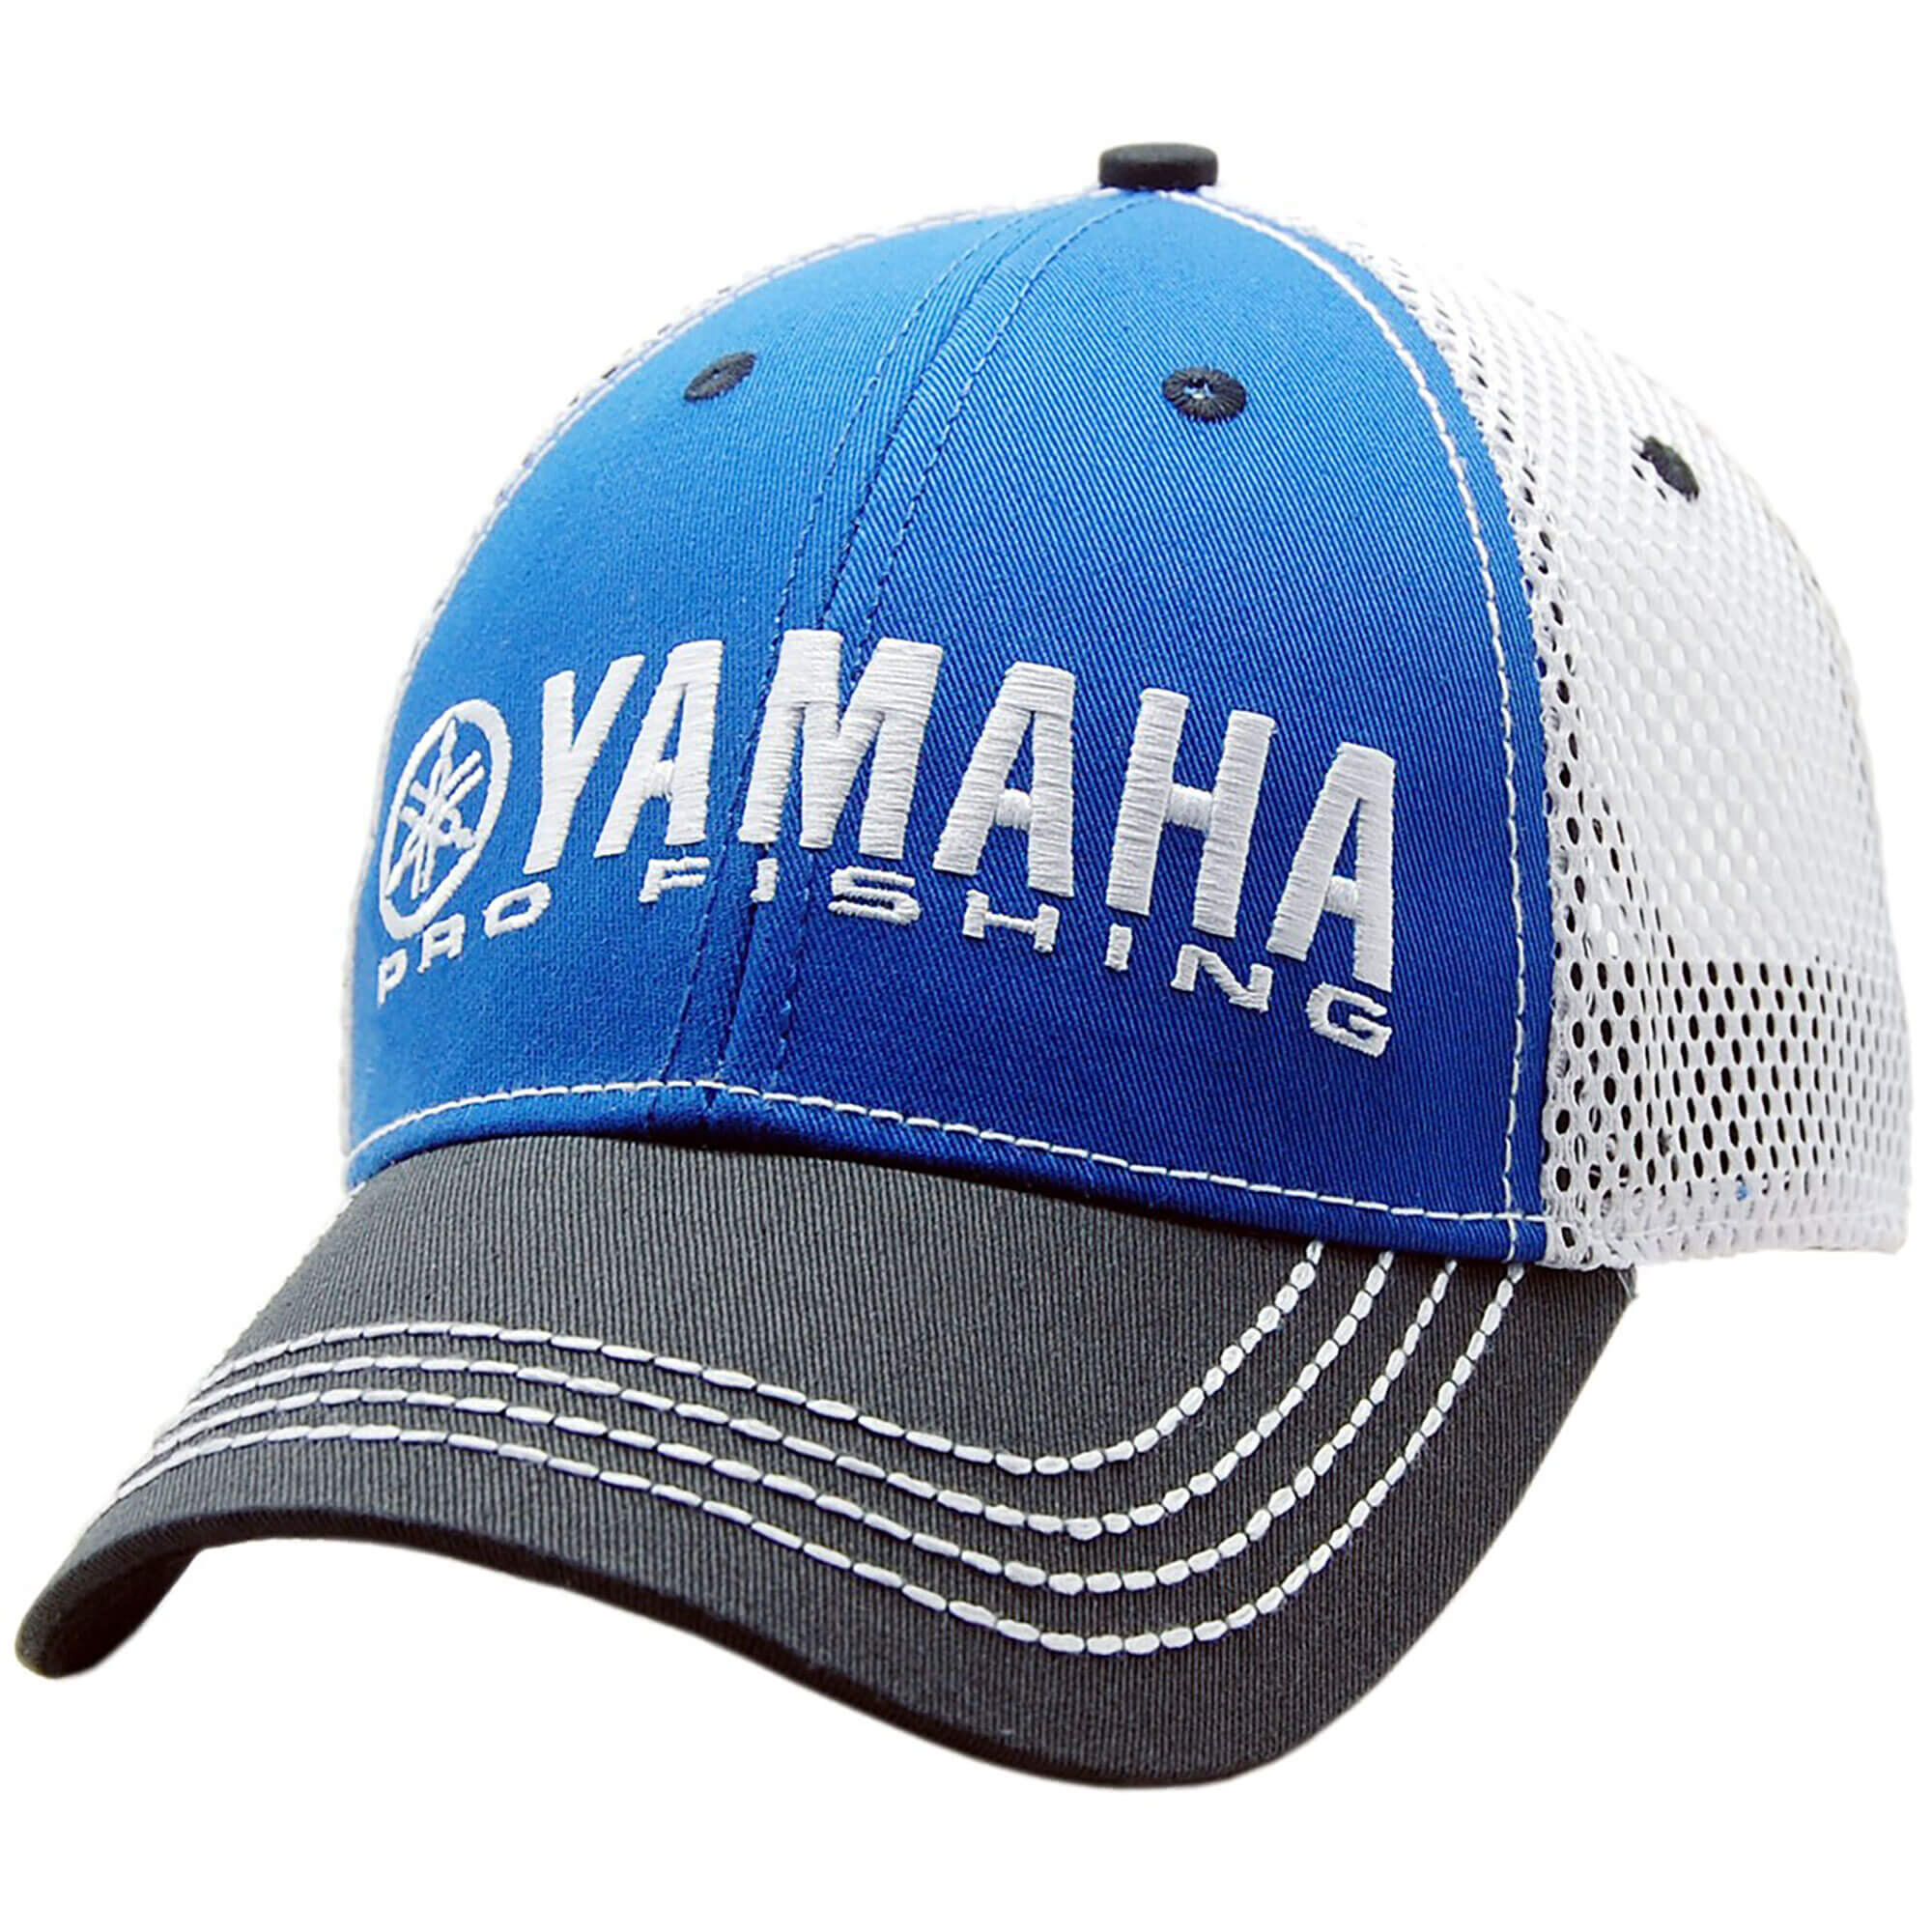 Yamaha Pro Fishing Mesh Adjustable Baseball Cap